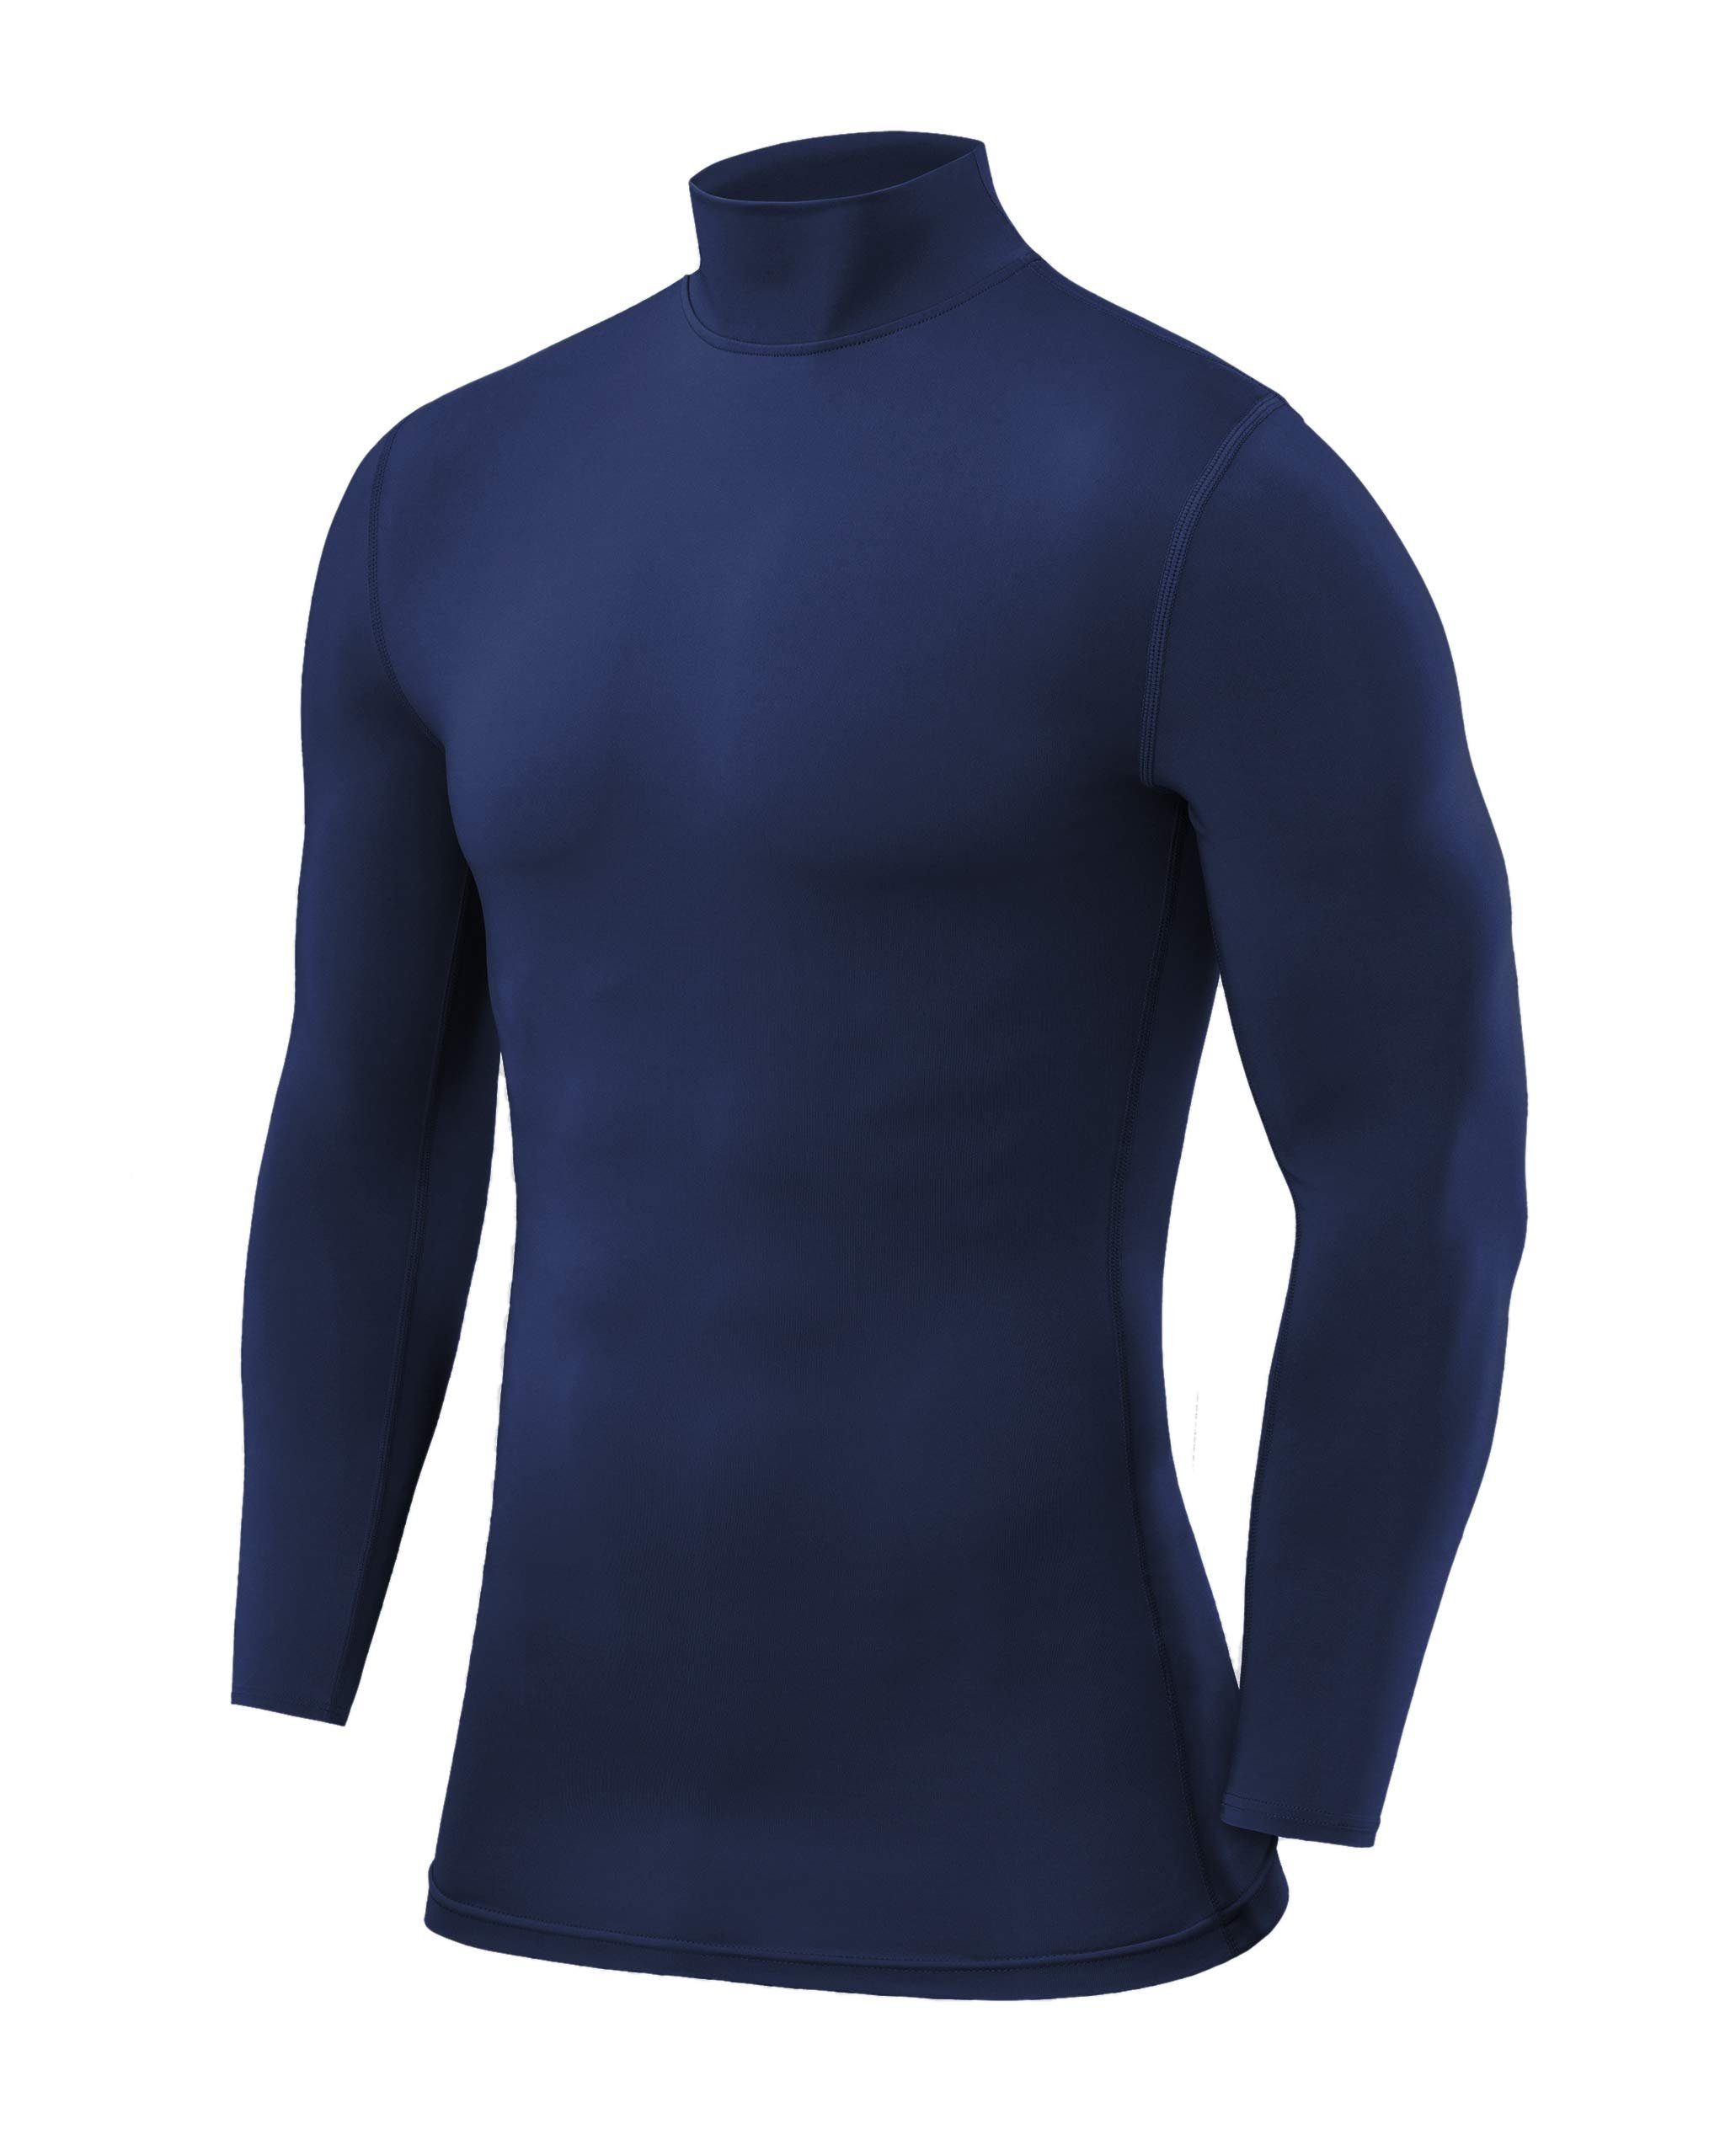 Langarmshirt PowerLayer Neck XXL - Mock Blau, Herren Langarm POWERLAYER Kompressionsshirt